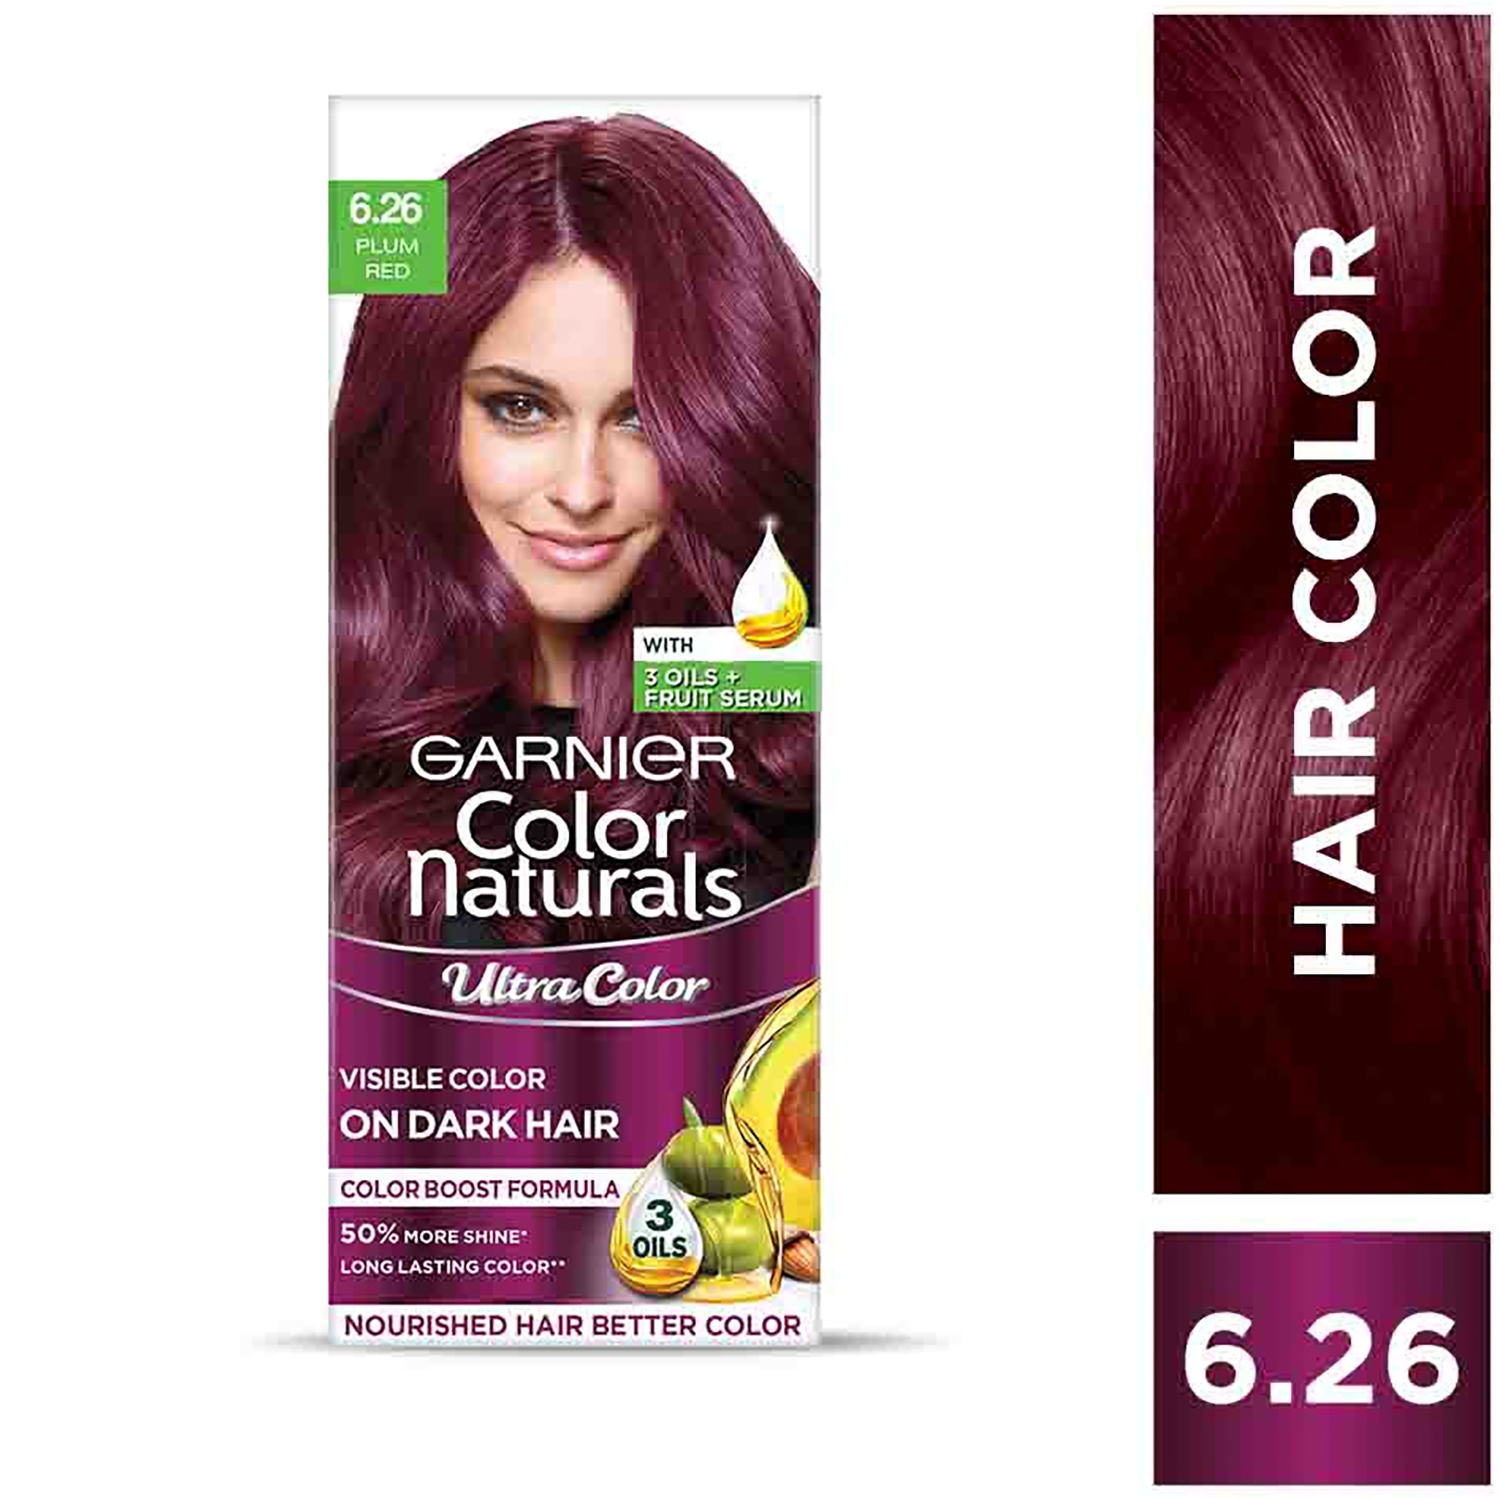 Garnier | Garnier Color Naturals Creme Riche Hair Color - Shade 6.26 Plum Red (55ml + 50g)